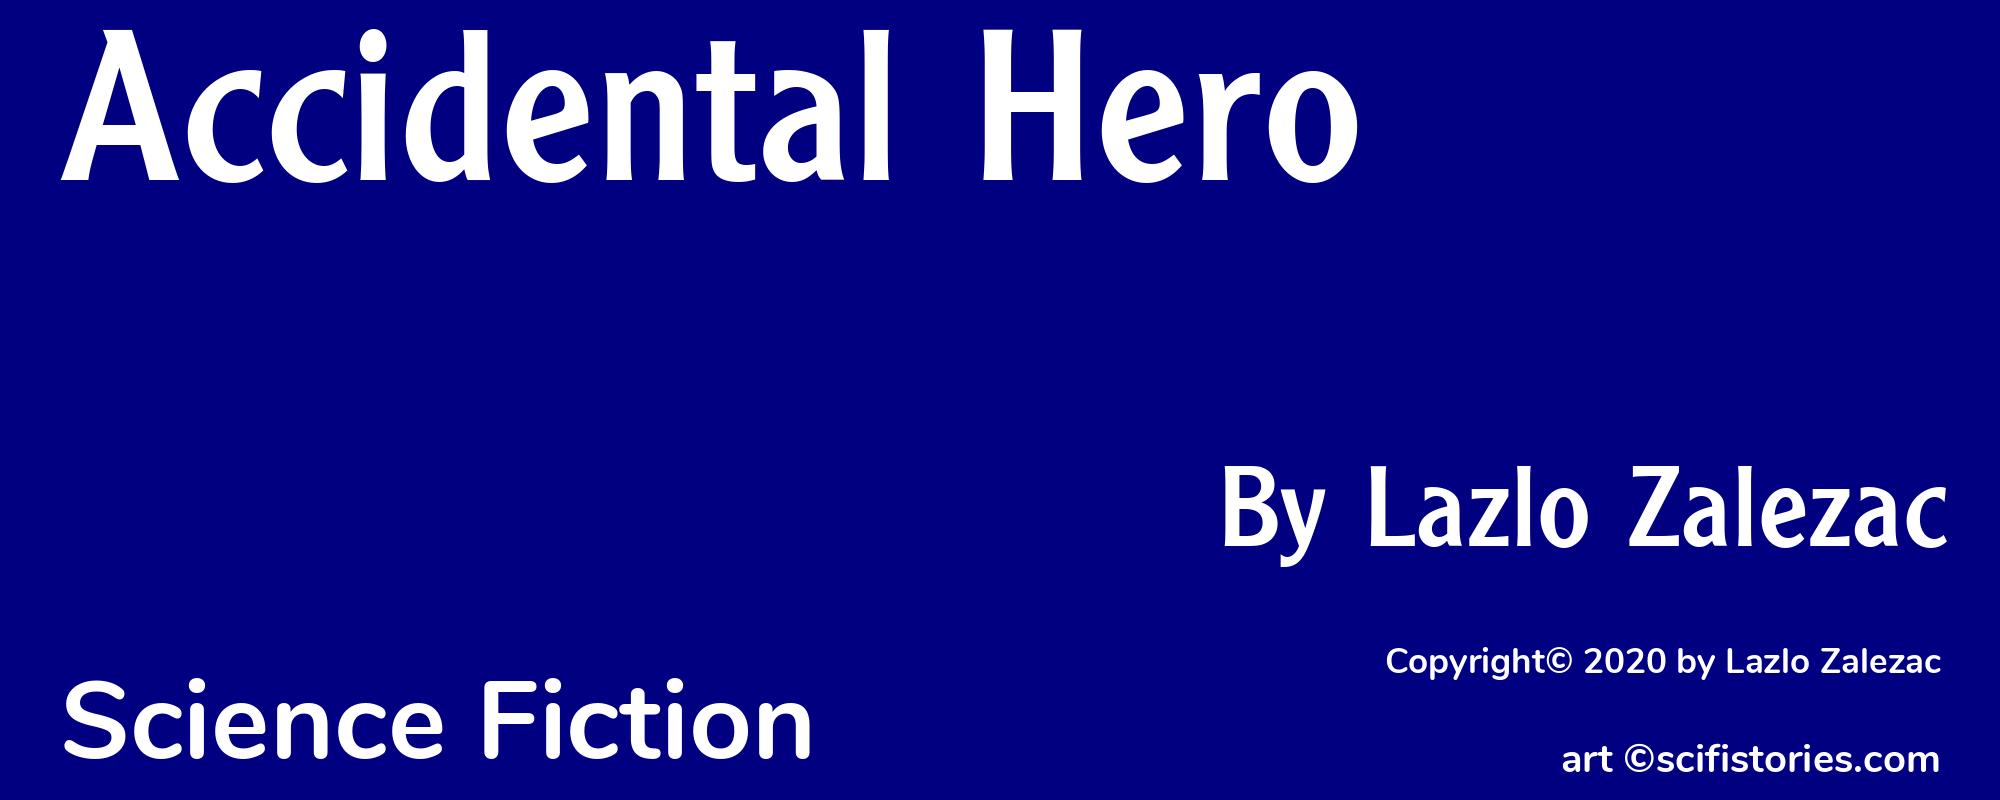 Accidental Hero - Cover